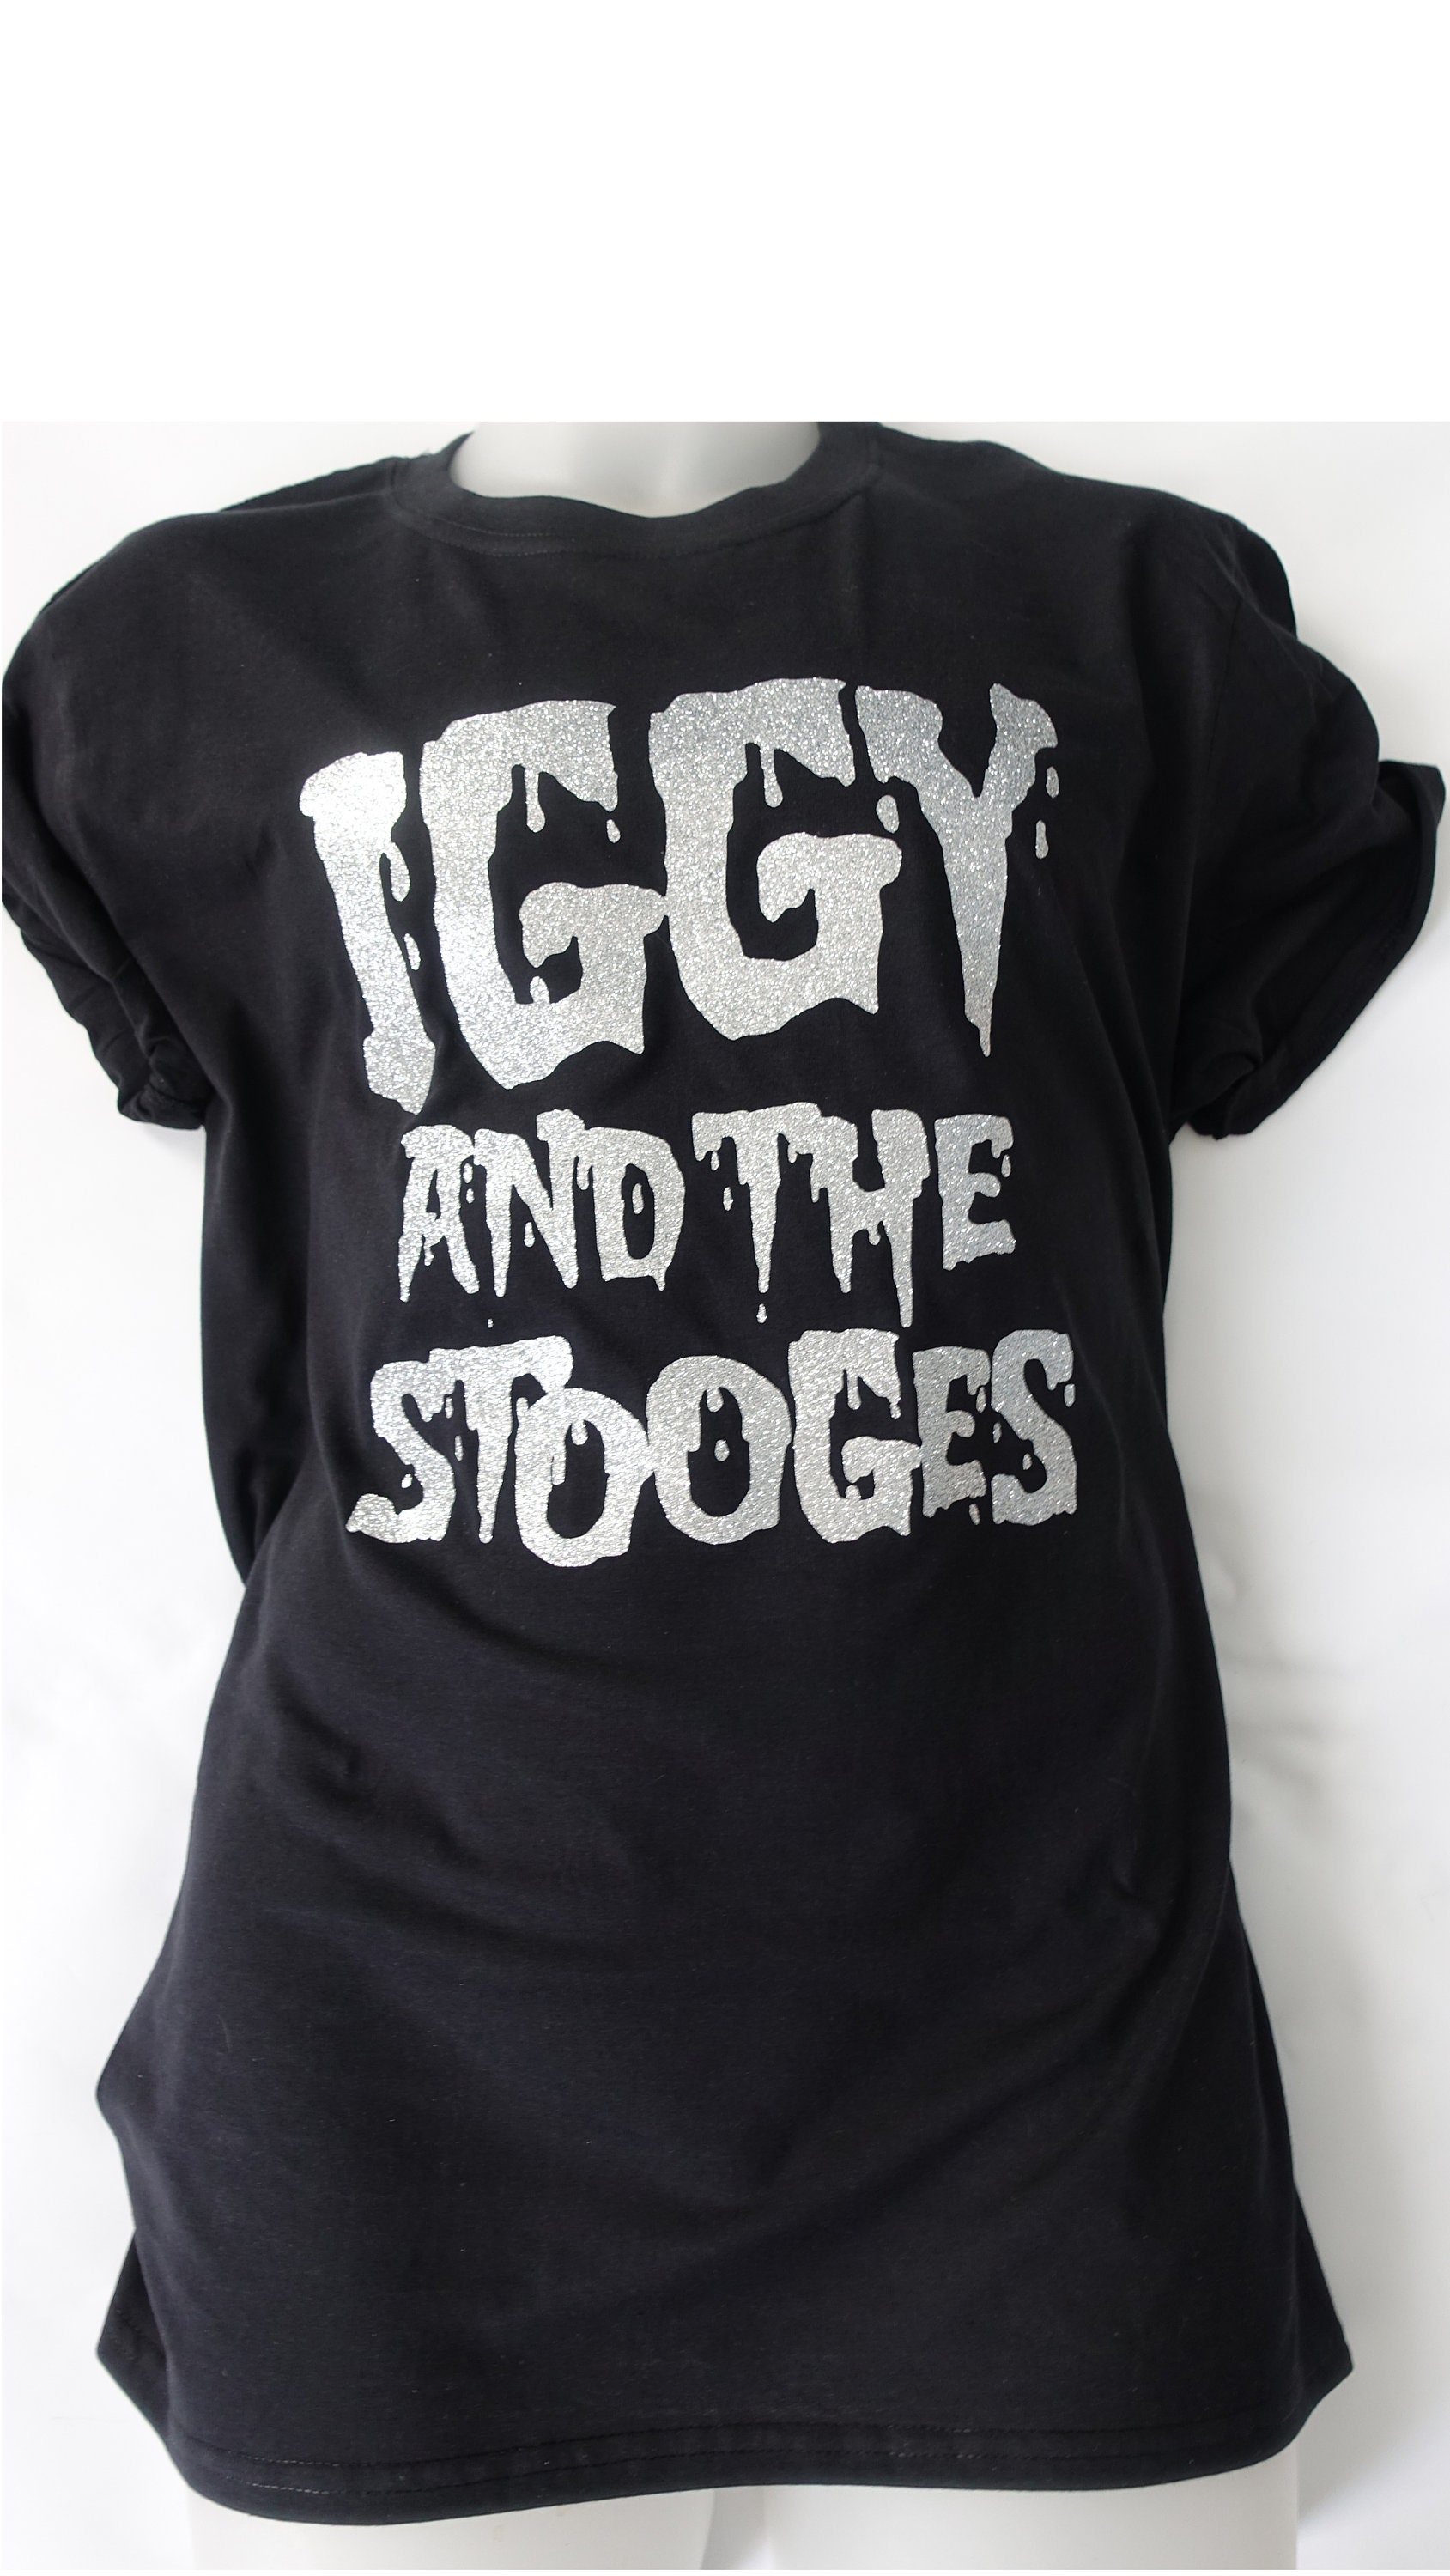 The Stooges Iggy Pop TShirt Punk Rock Band Men's T-Shirt 100% Cotton Round neck